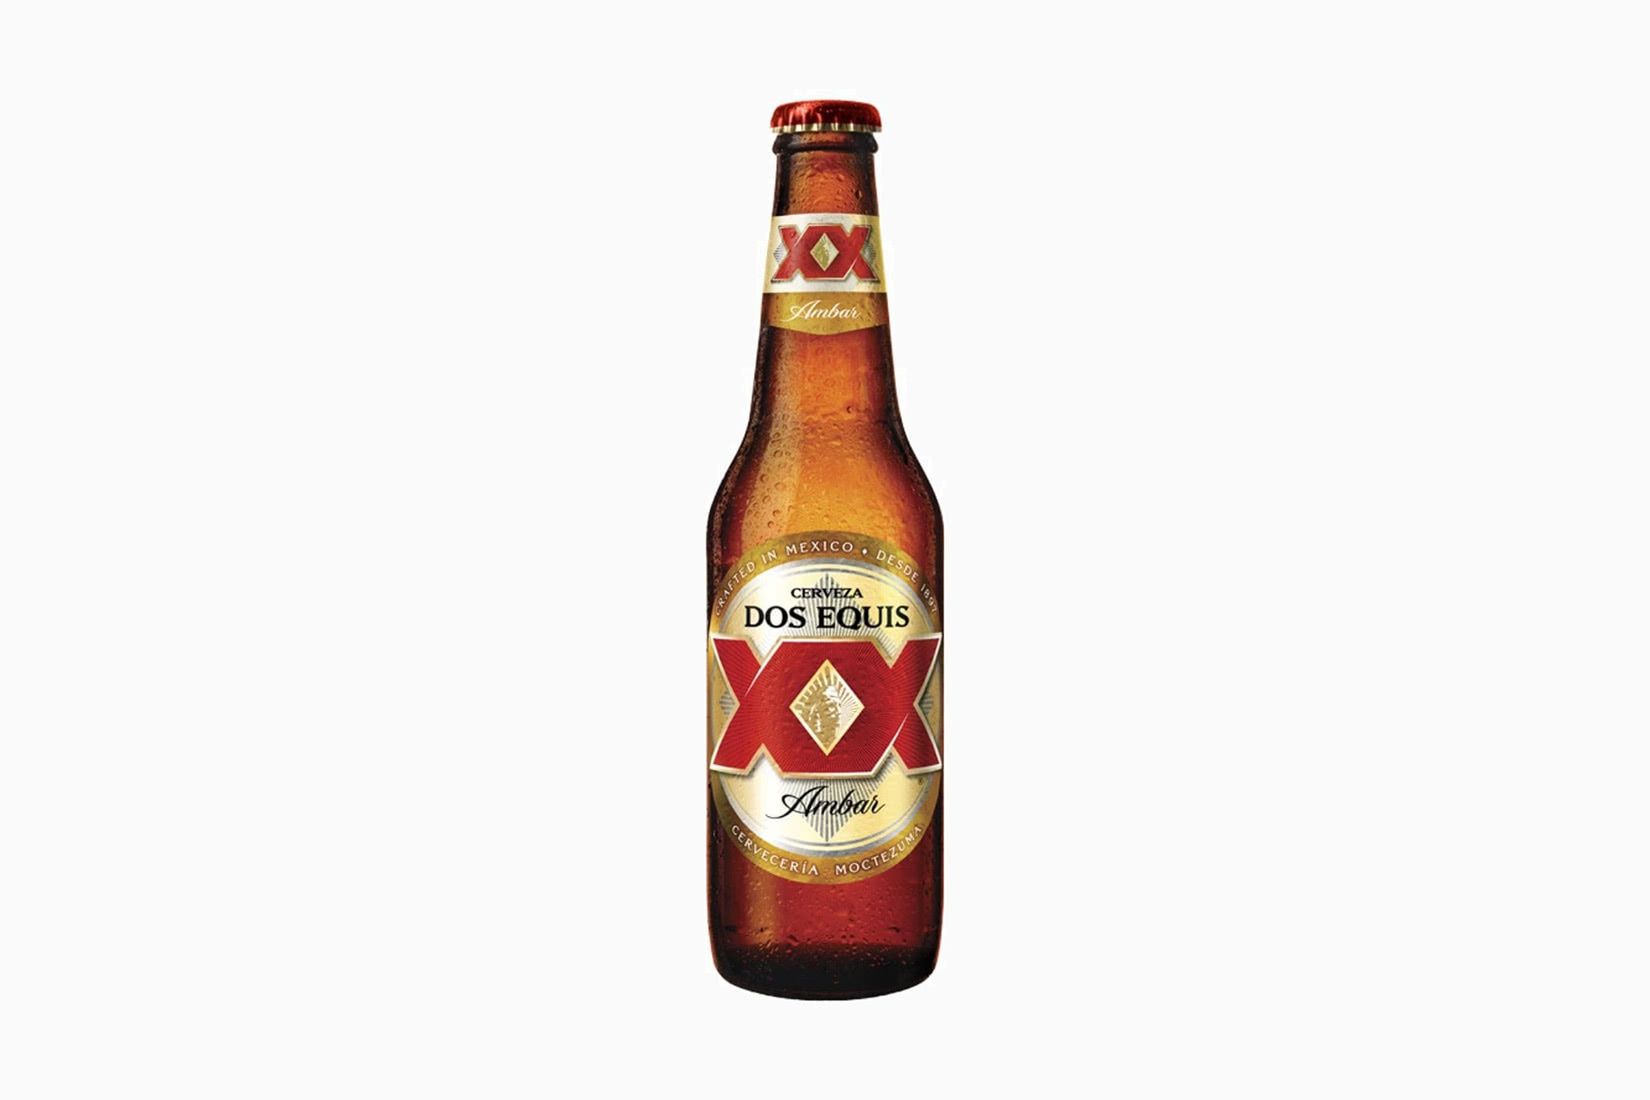 meilleures marques de bière dos equis ambar - Luxe Digital